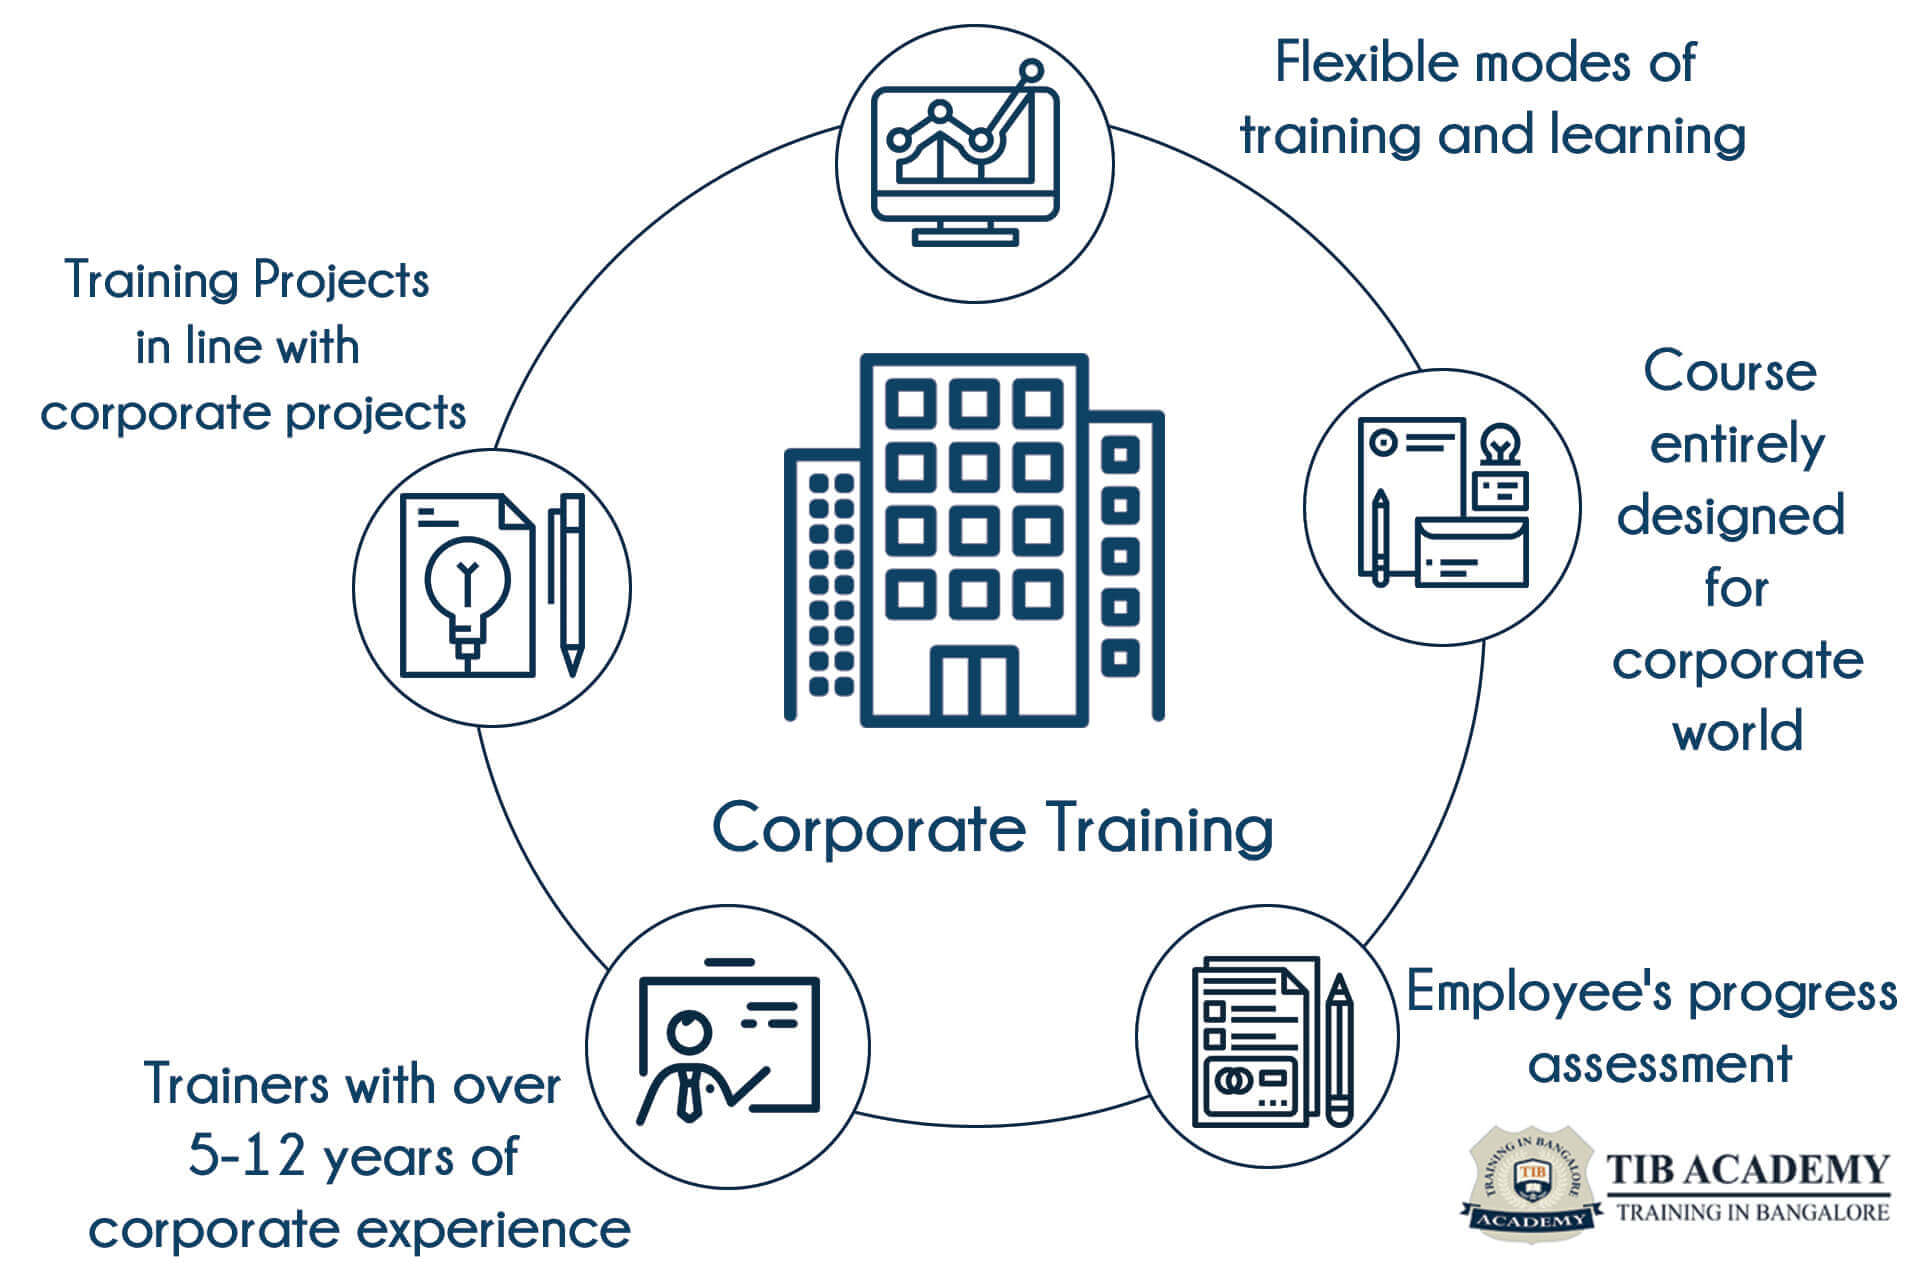 TIB Academy - Corporate training 